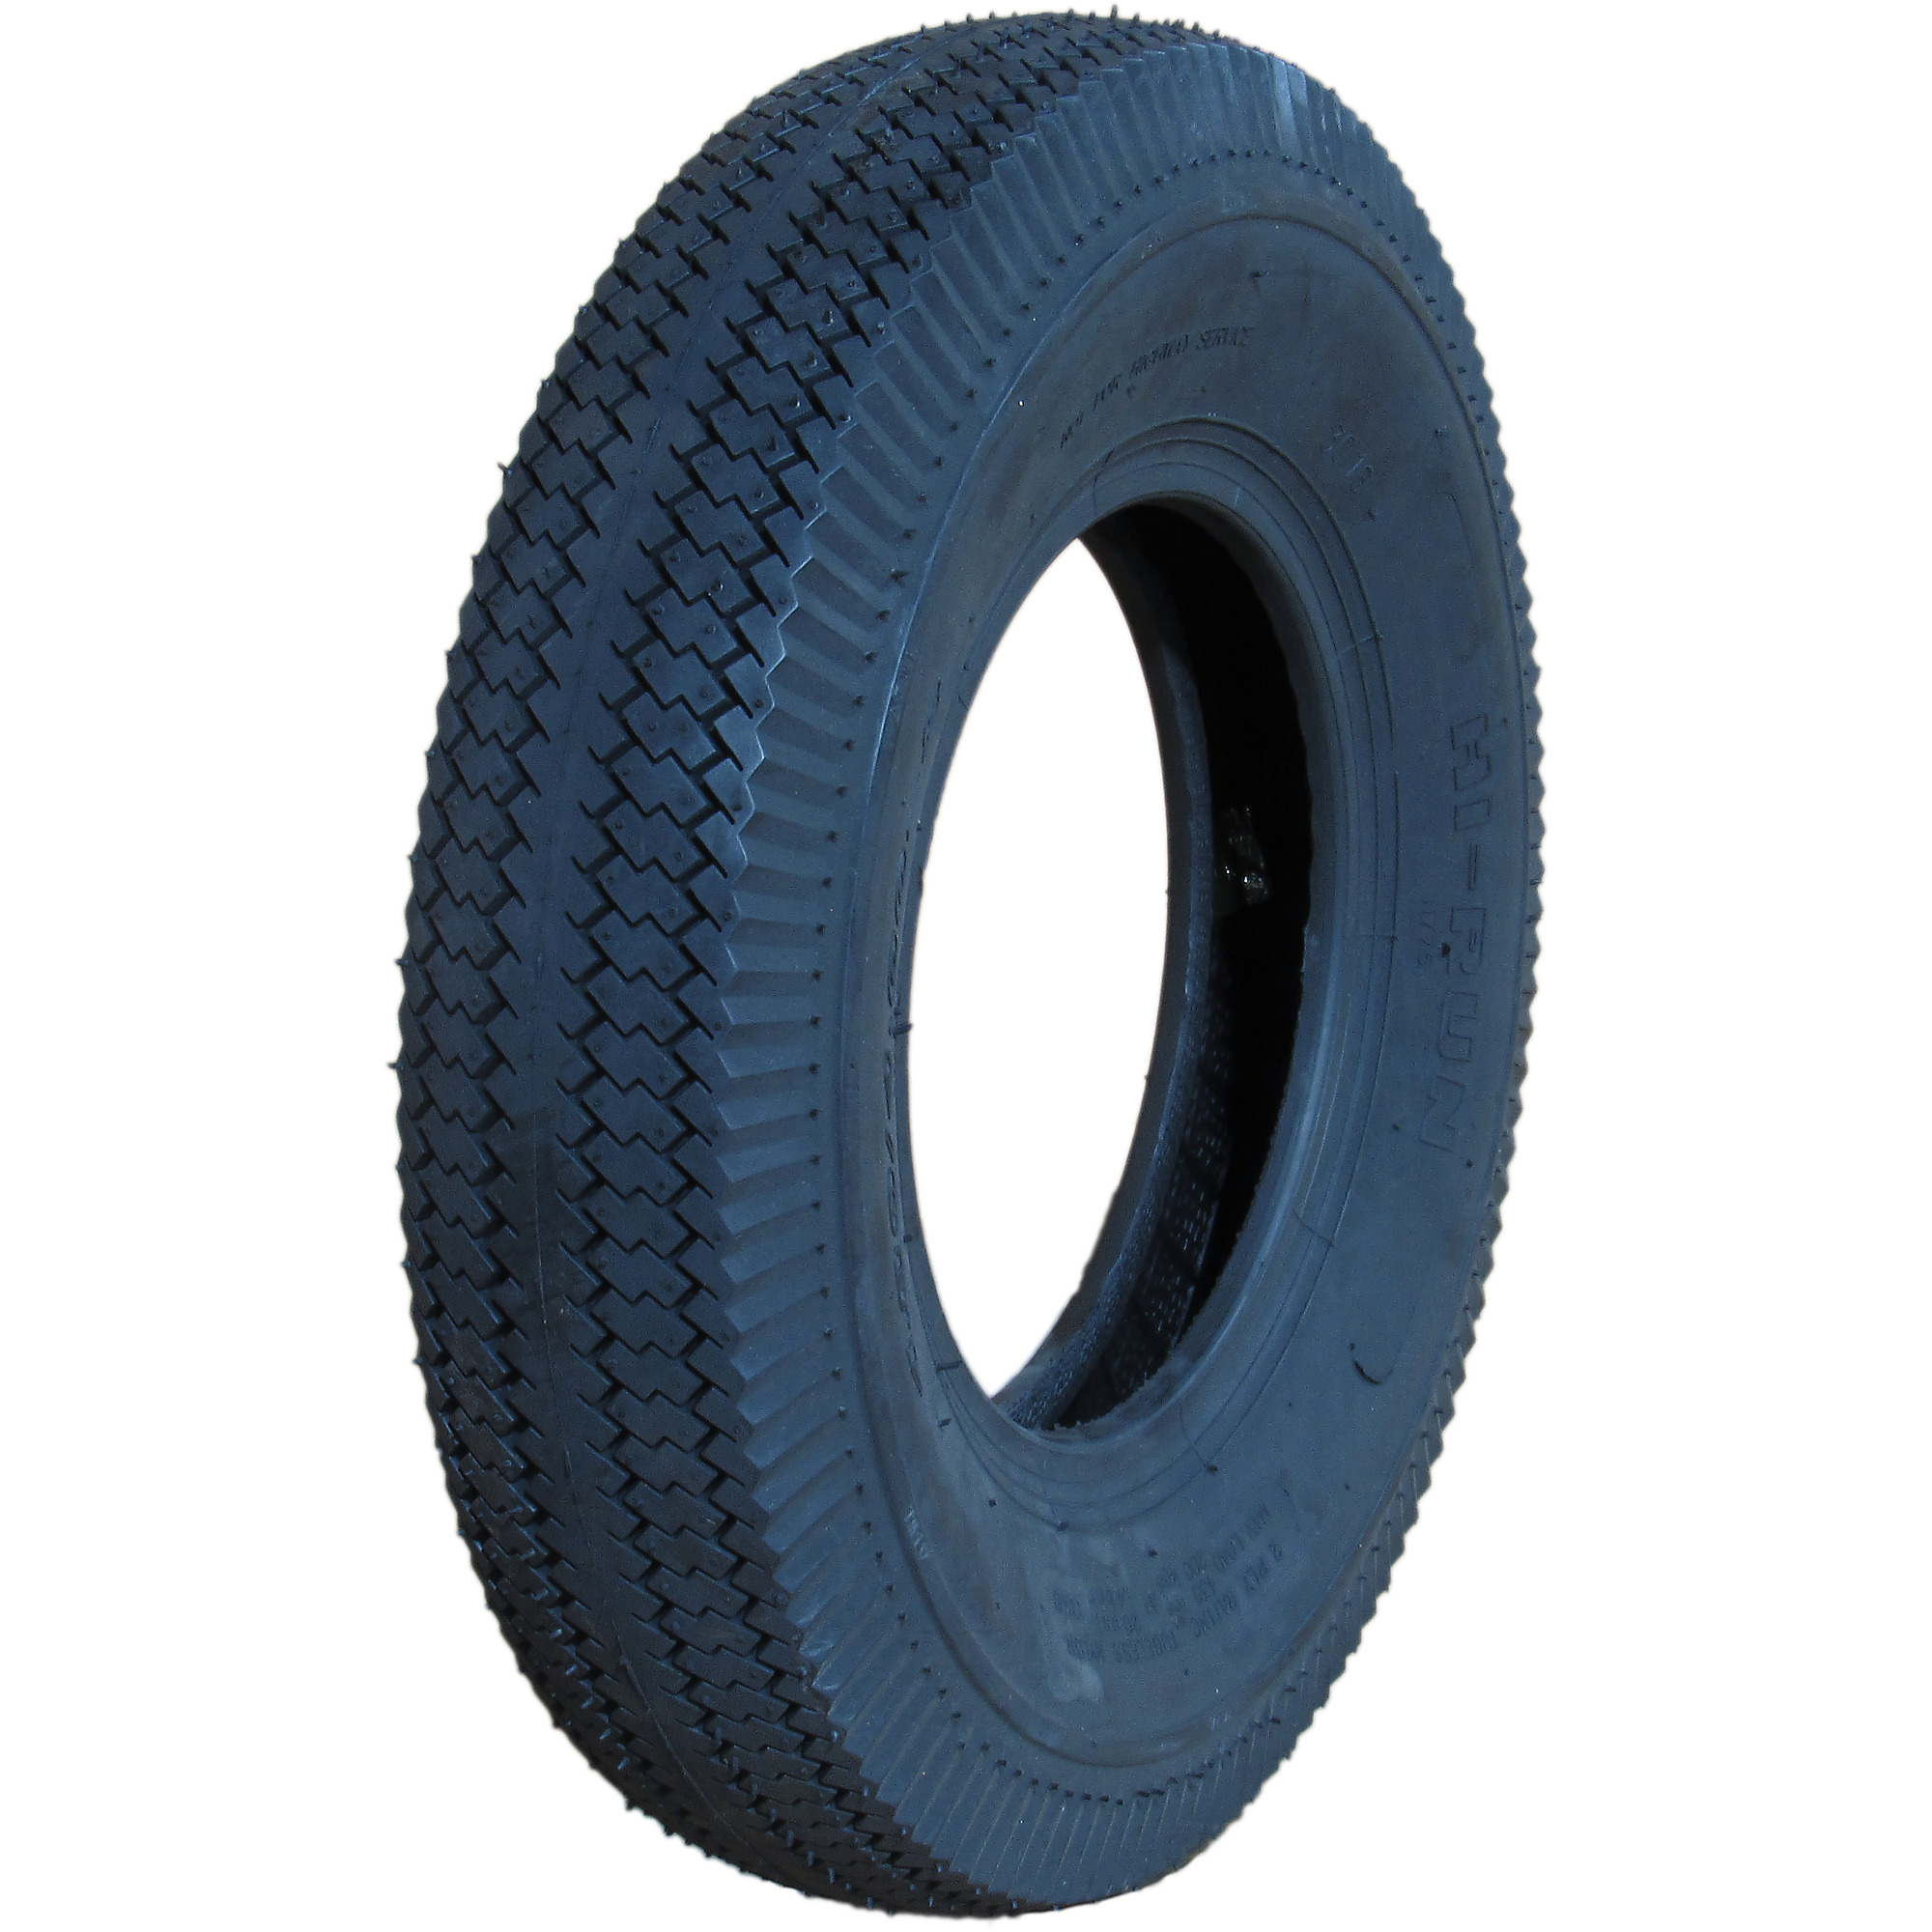 HI-RUN, Lawn Garden Tire, Sawtooth, Tire Size 4.80/4.00-8 Load Range Rating A, Model WD1307